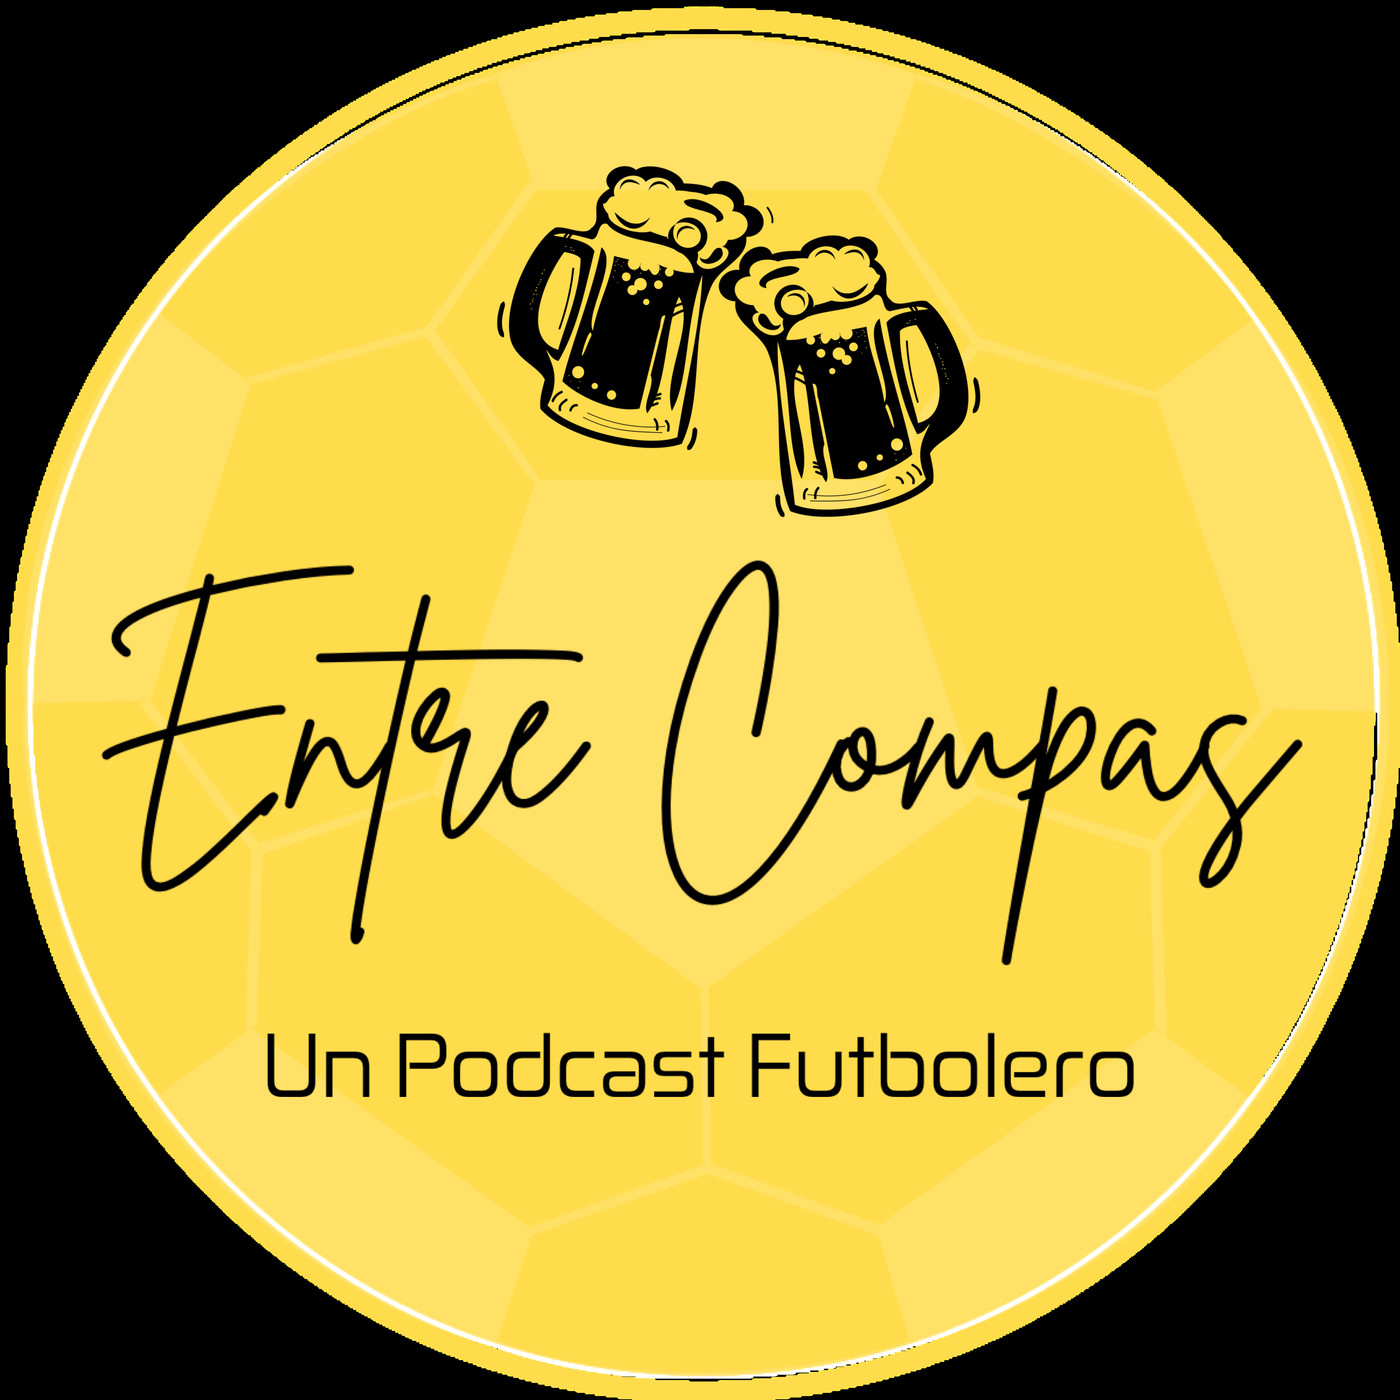 Entre Compas. Un Podcast futbolero